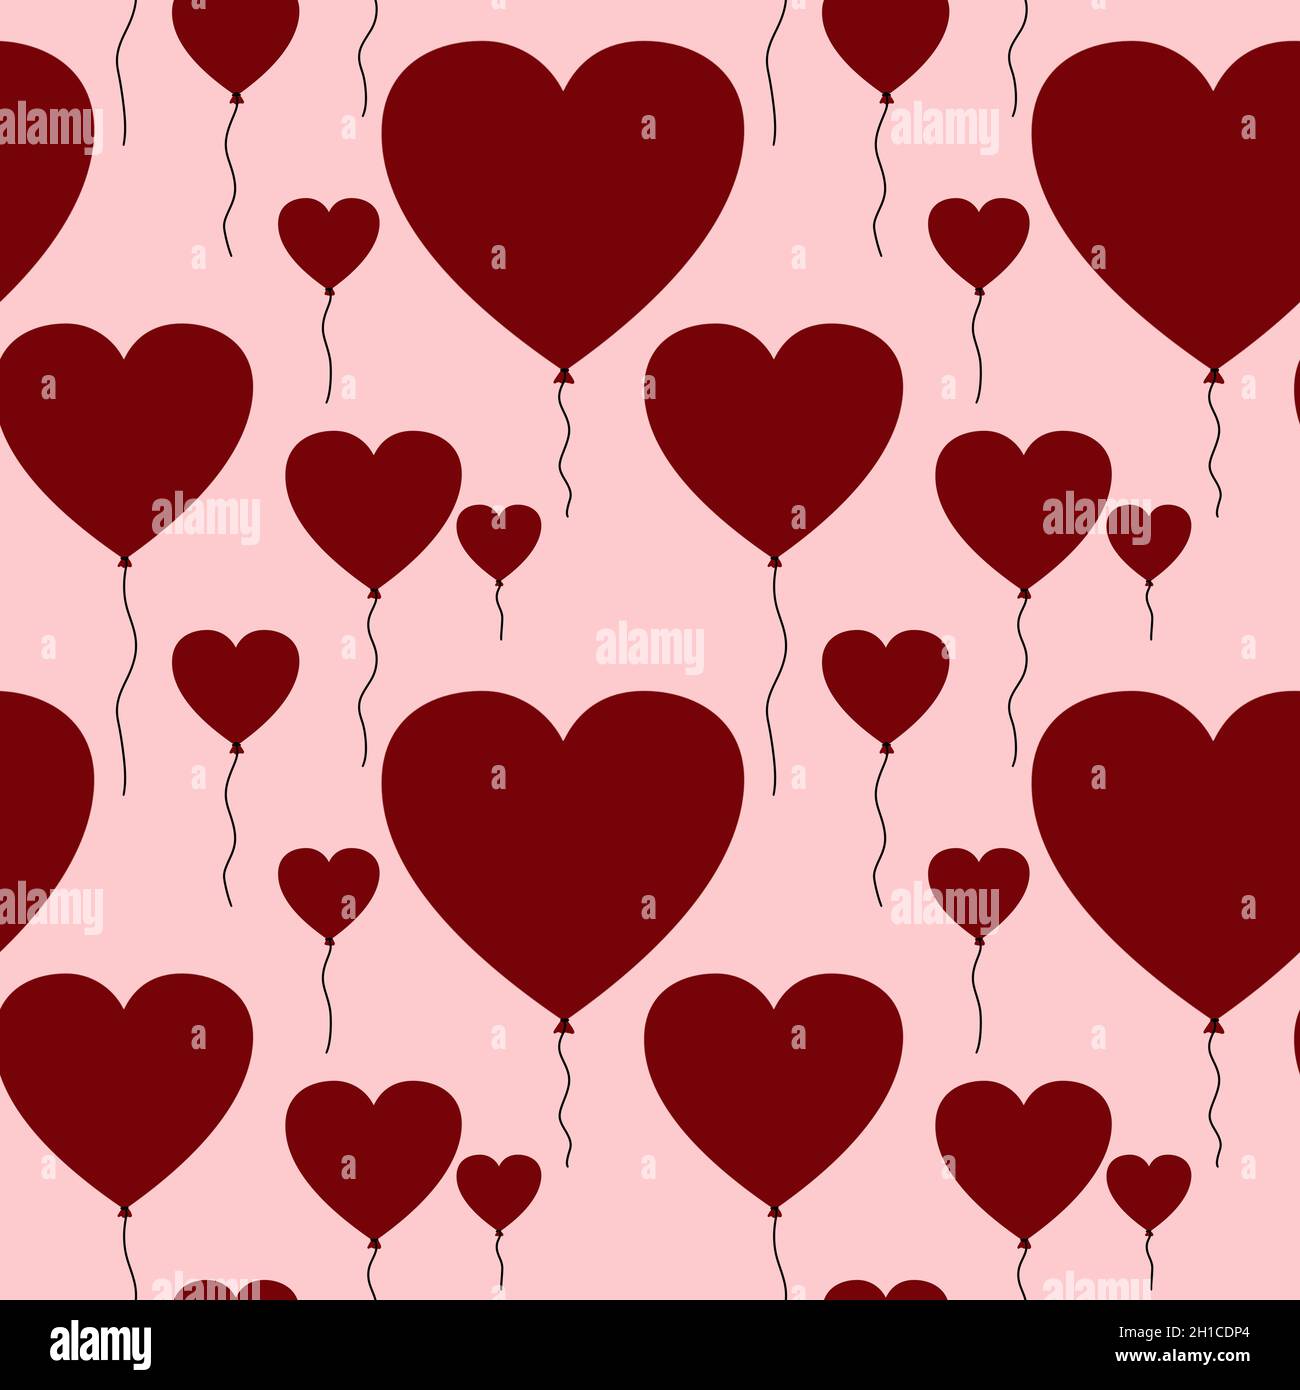 Ballon Joyeuse Saint Valentin forme coeur noir rose motif coeur